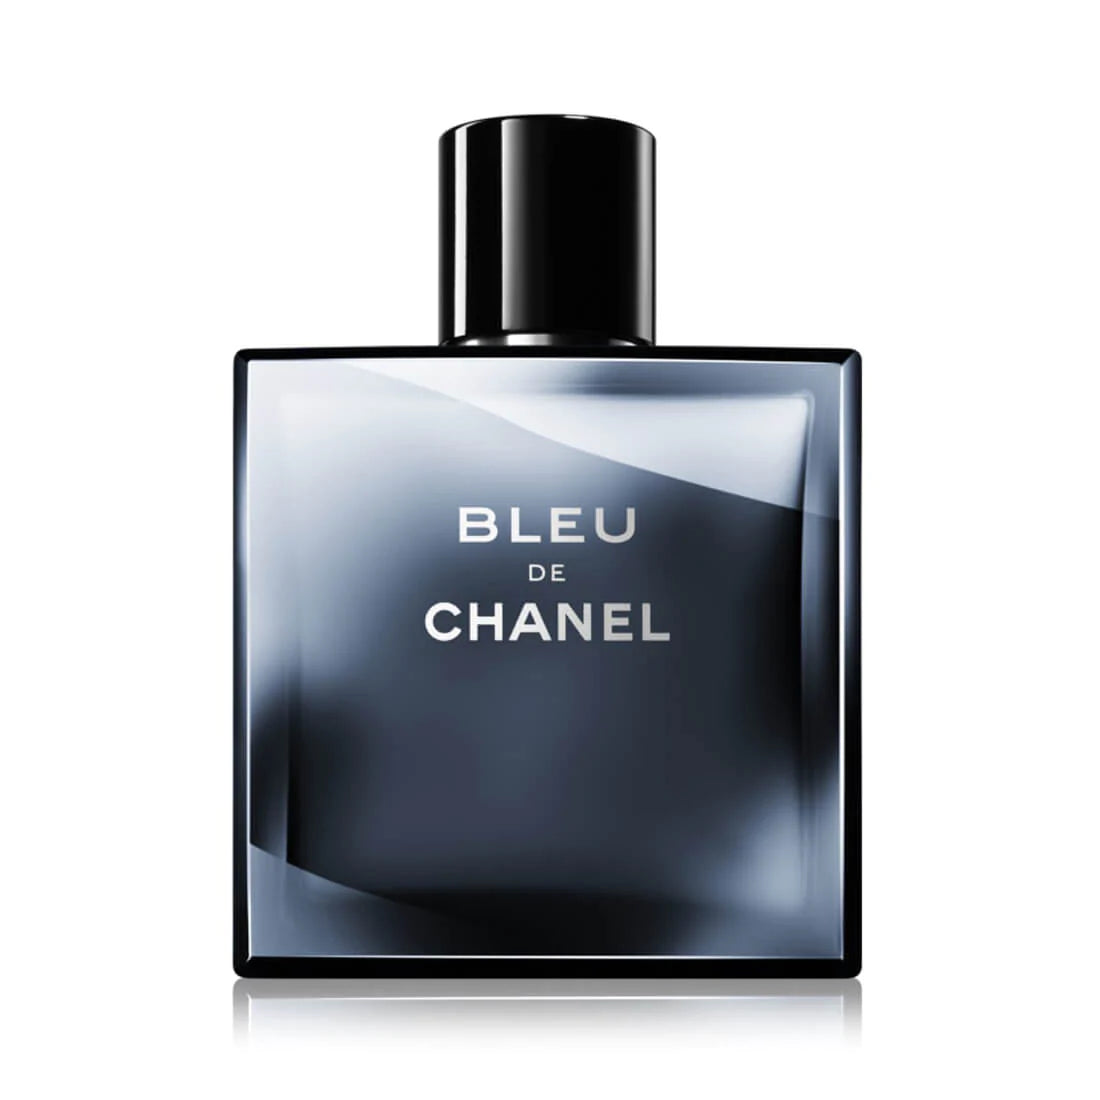 Bleu de Chanel By Chanel EDT 150ml Perfume Retail Pack  Splash Fragrance